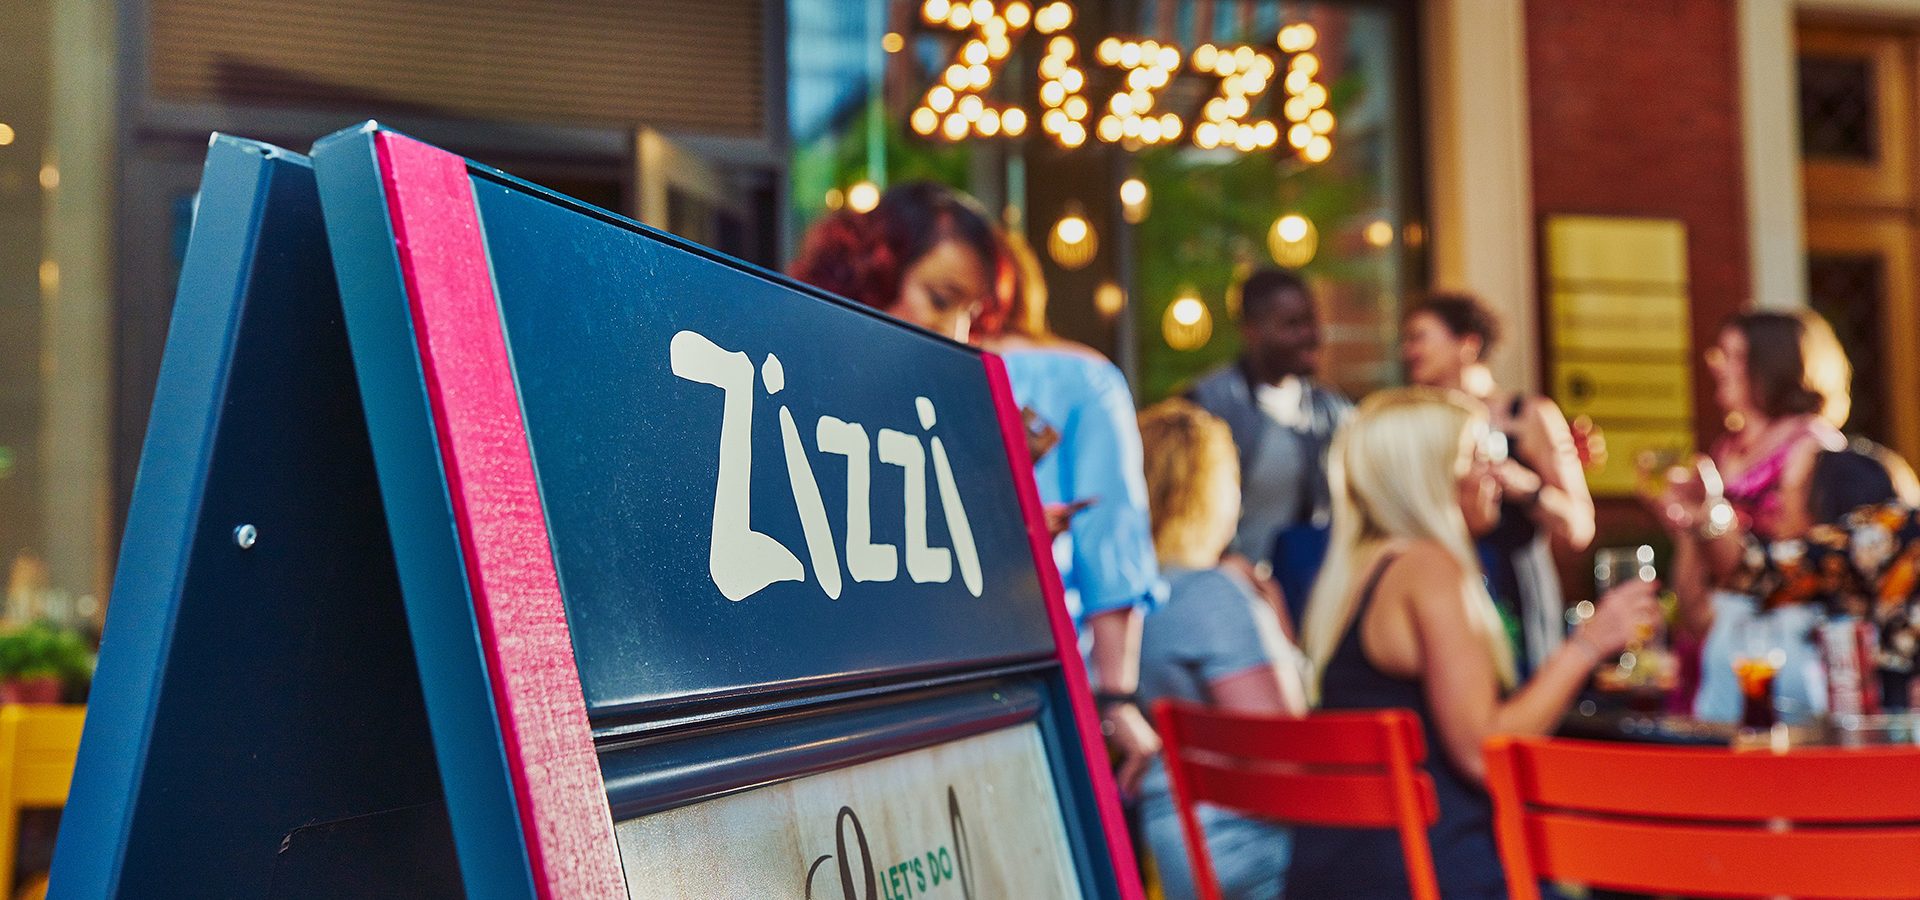 Exterior signage at Zizzi restaurant in Brindleyplace, Birmingham.